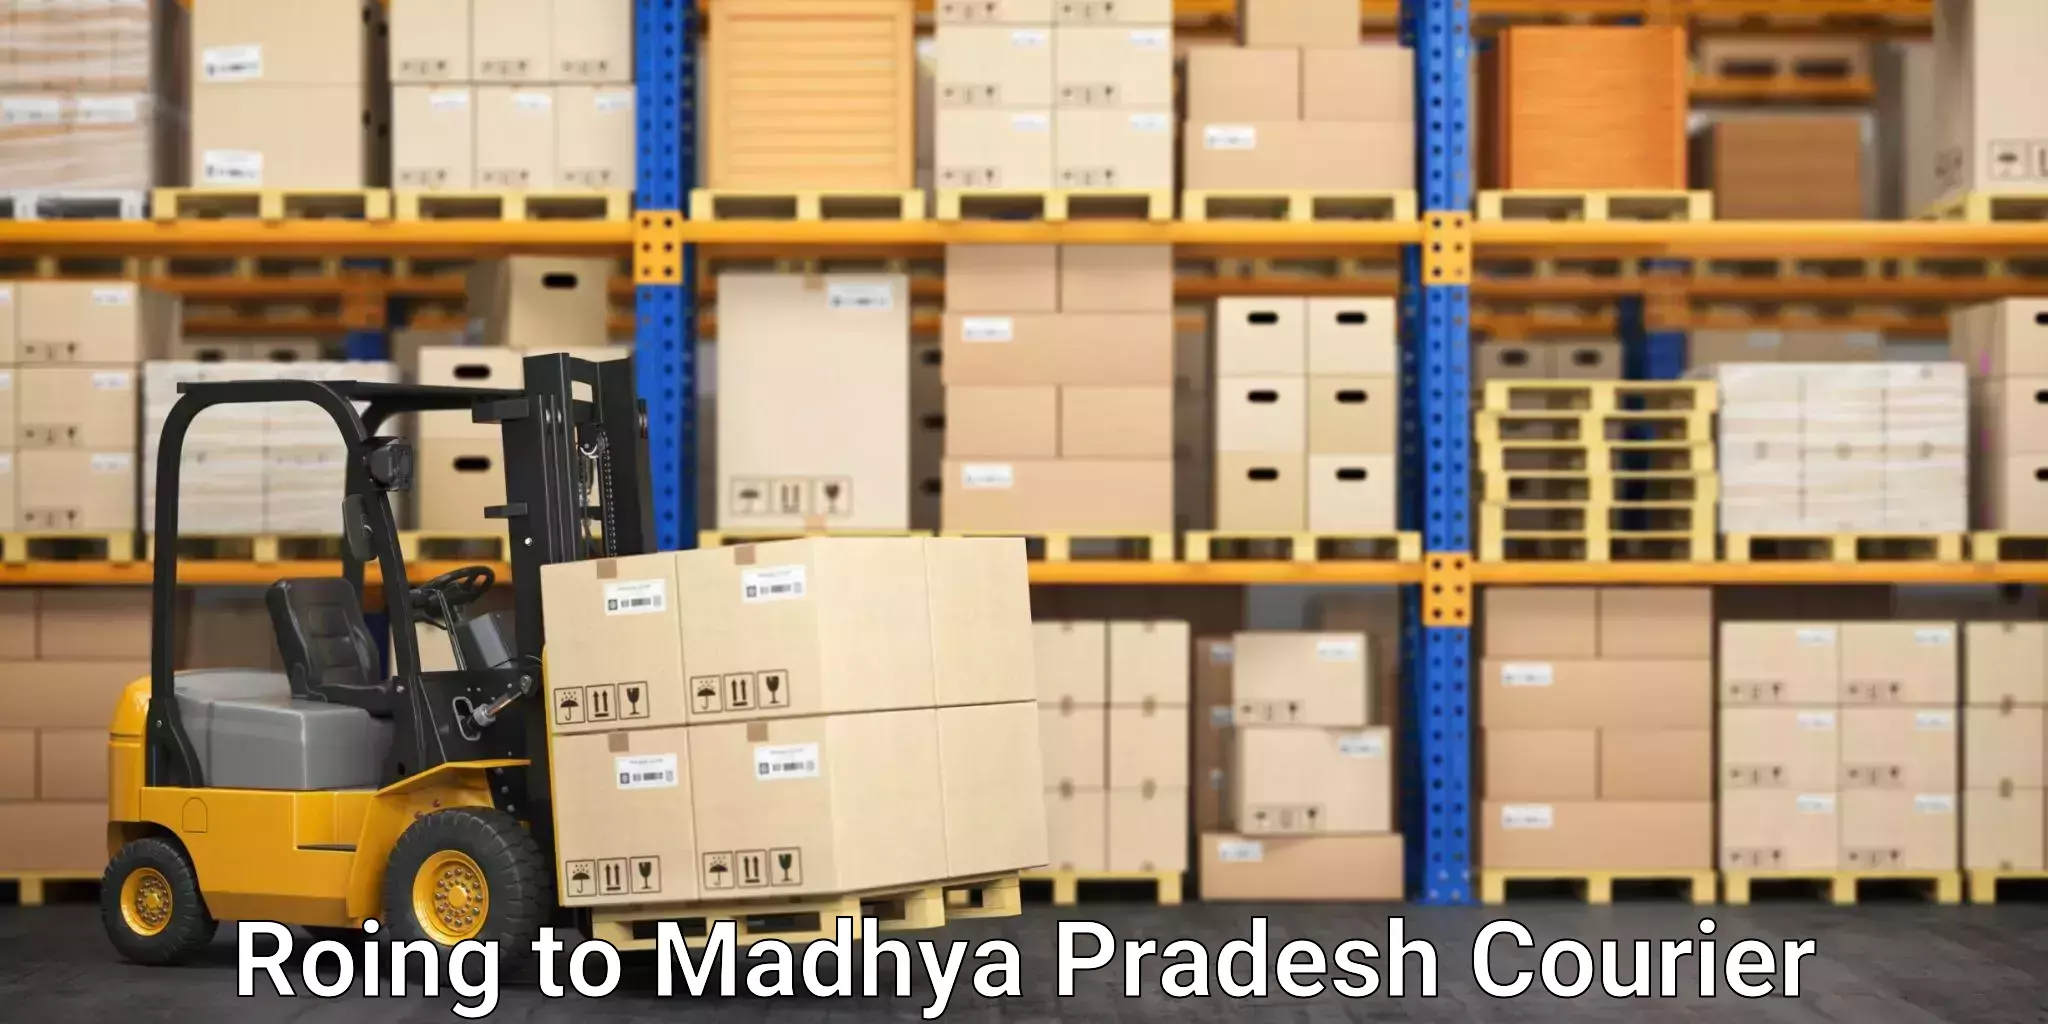 Pharmaceutical courier Roing to Madhya Pradesh